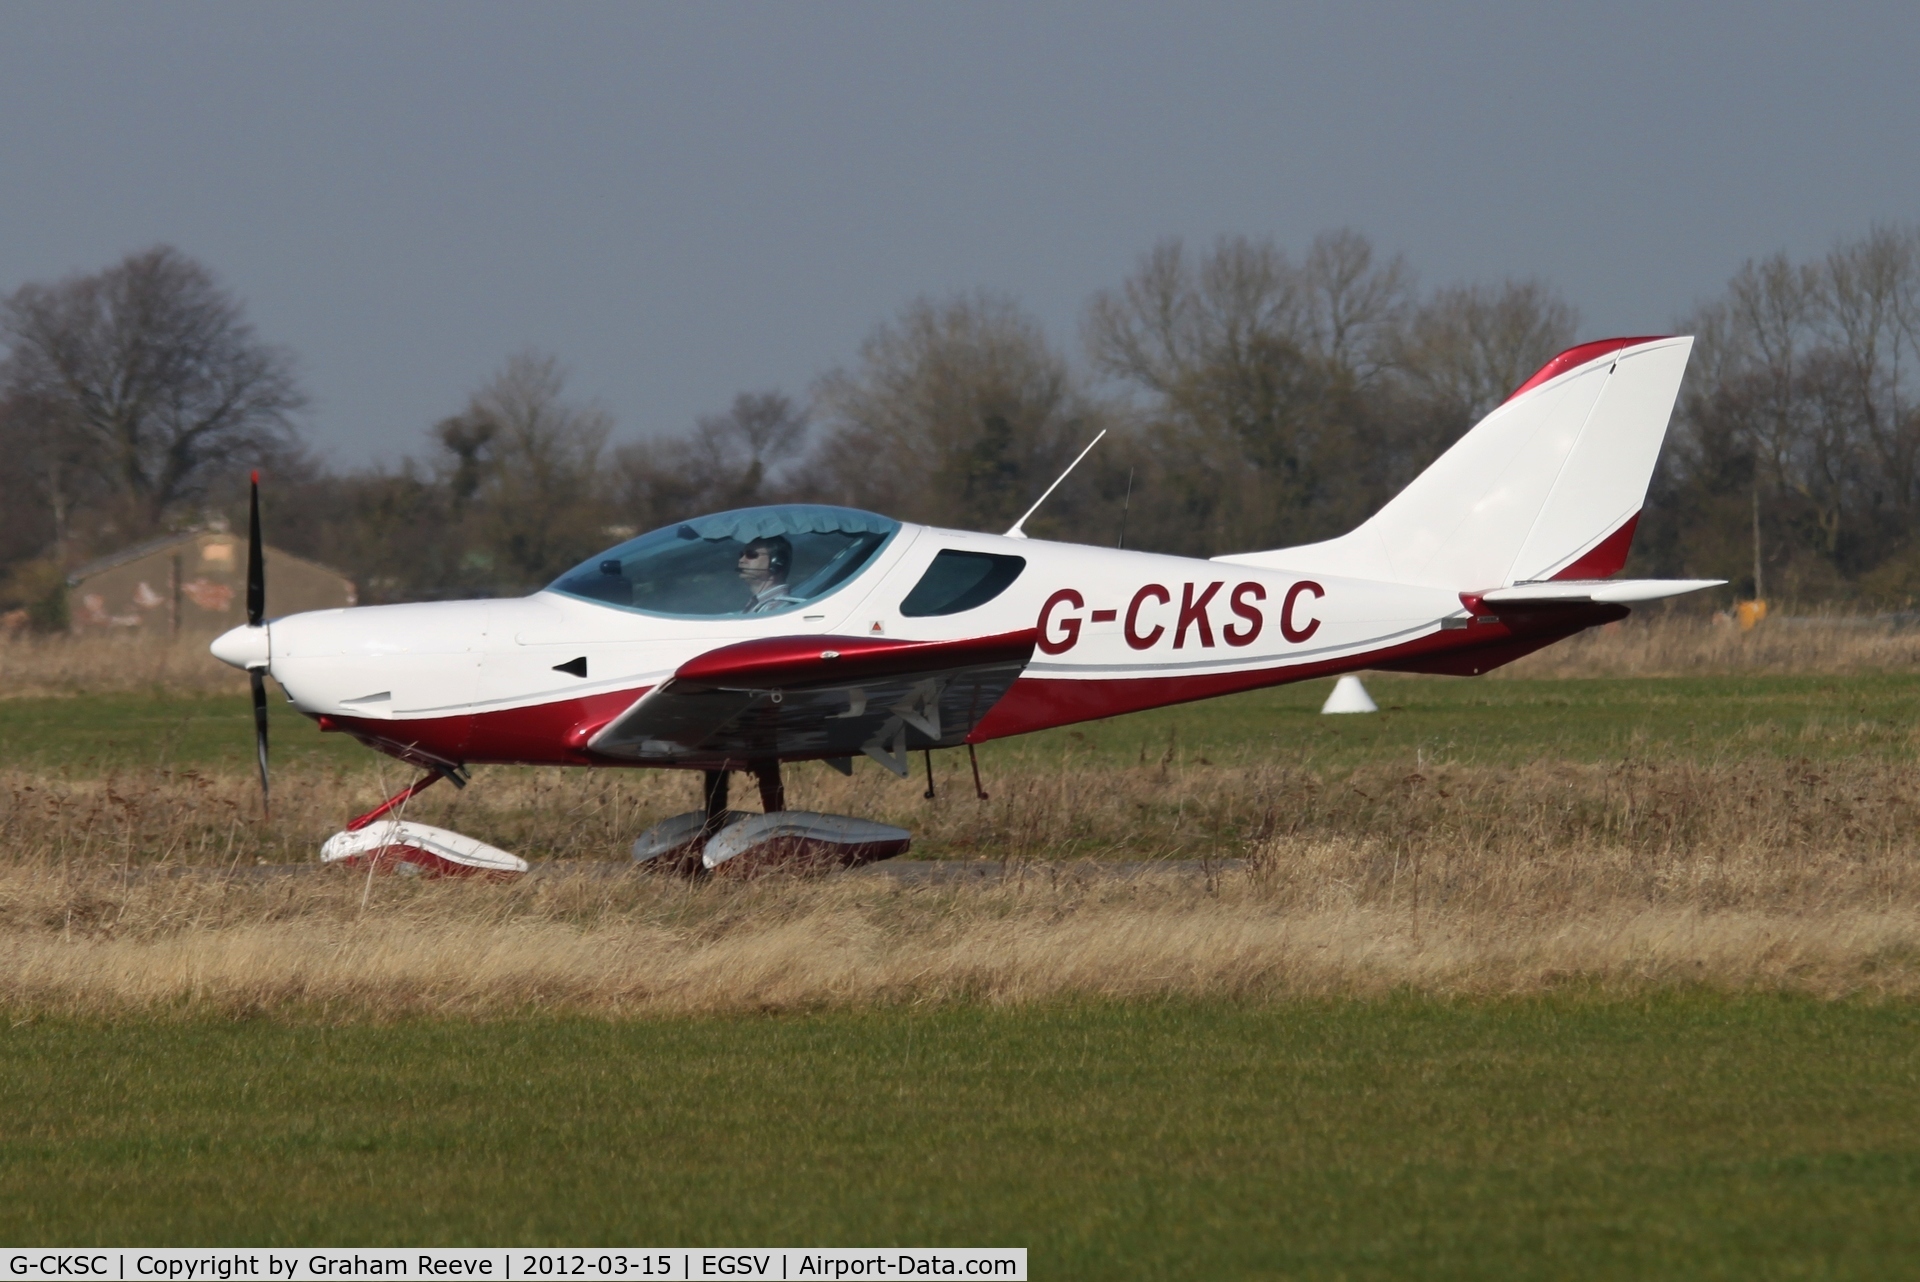 G-CKSC, 2010 CZAW SportCruiser C/N 09SC327, Just landed.